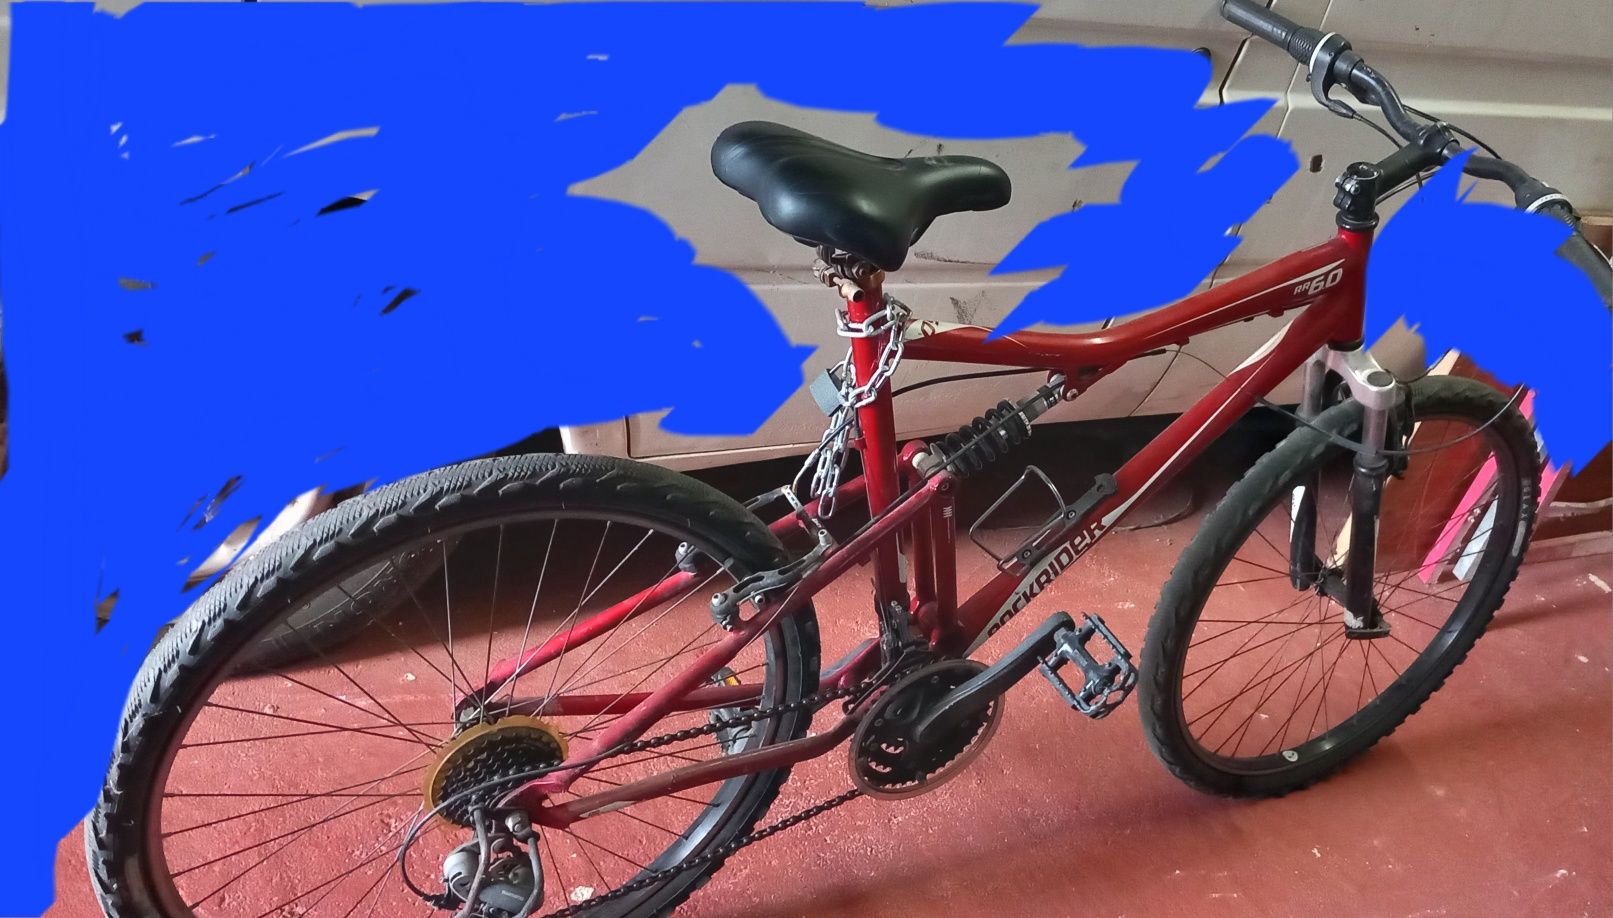 Bicicleta usada.